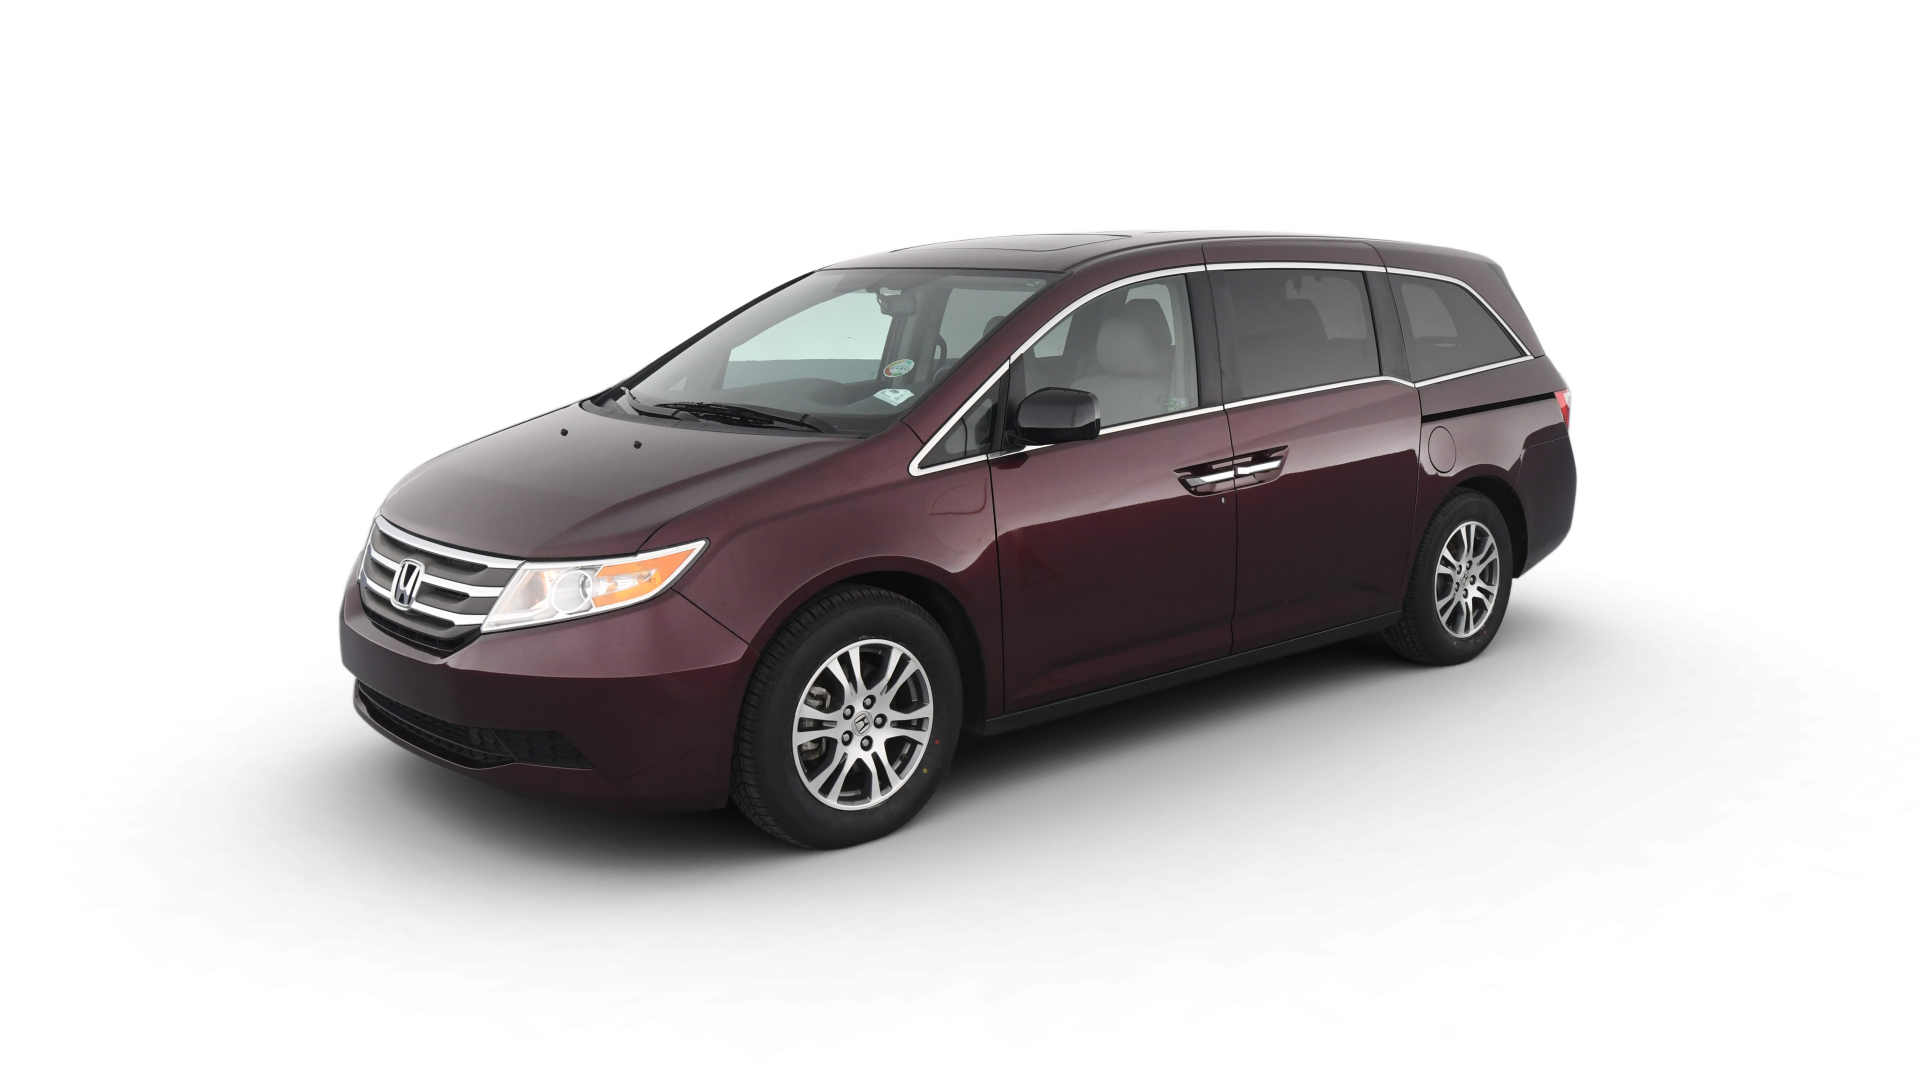 Used 2012 Honda Odyssey For Sale Online | Carvana